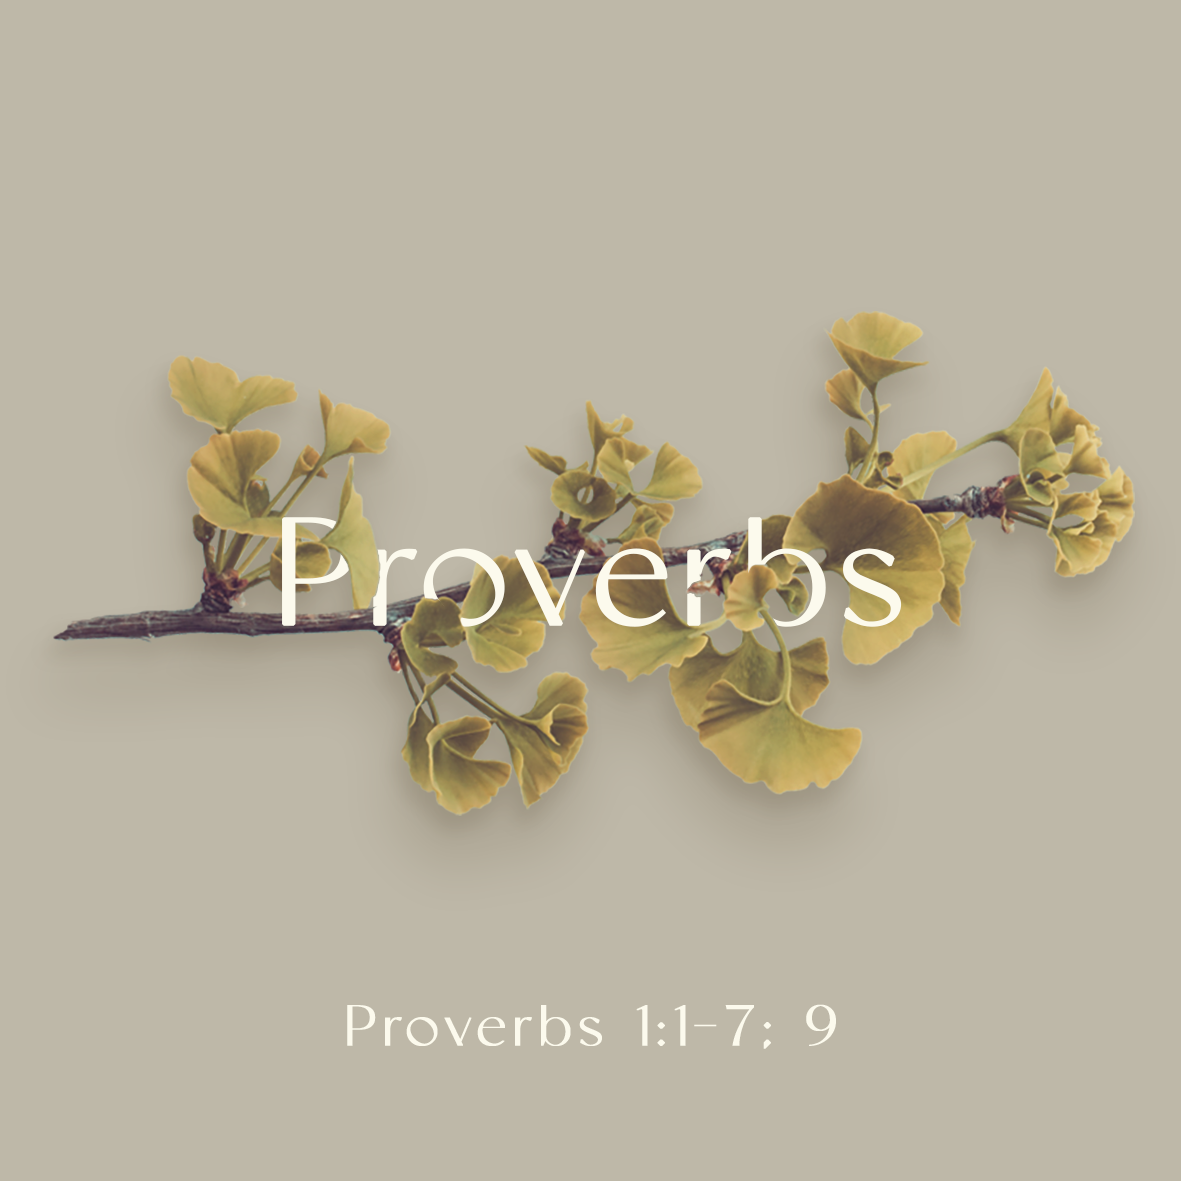 Proverbs (Pro 1:1-7; 9)